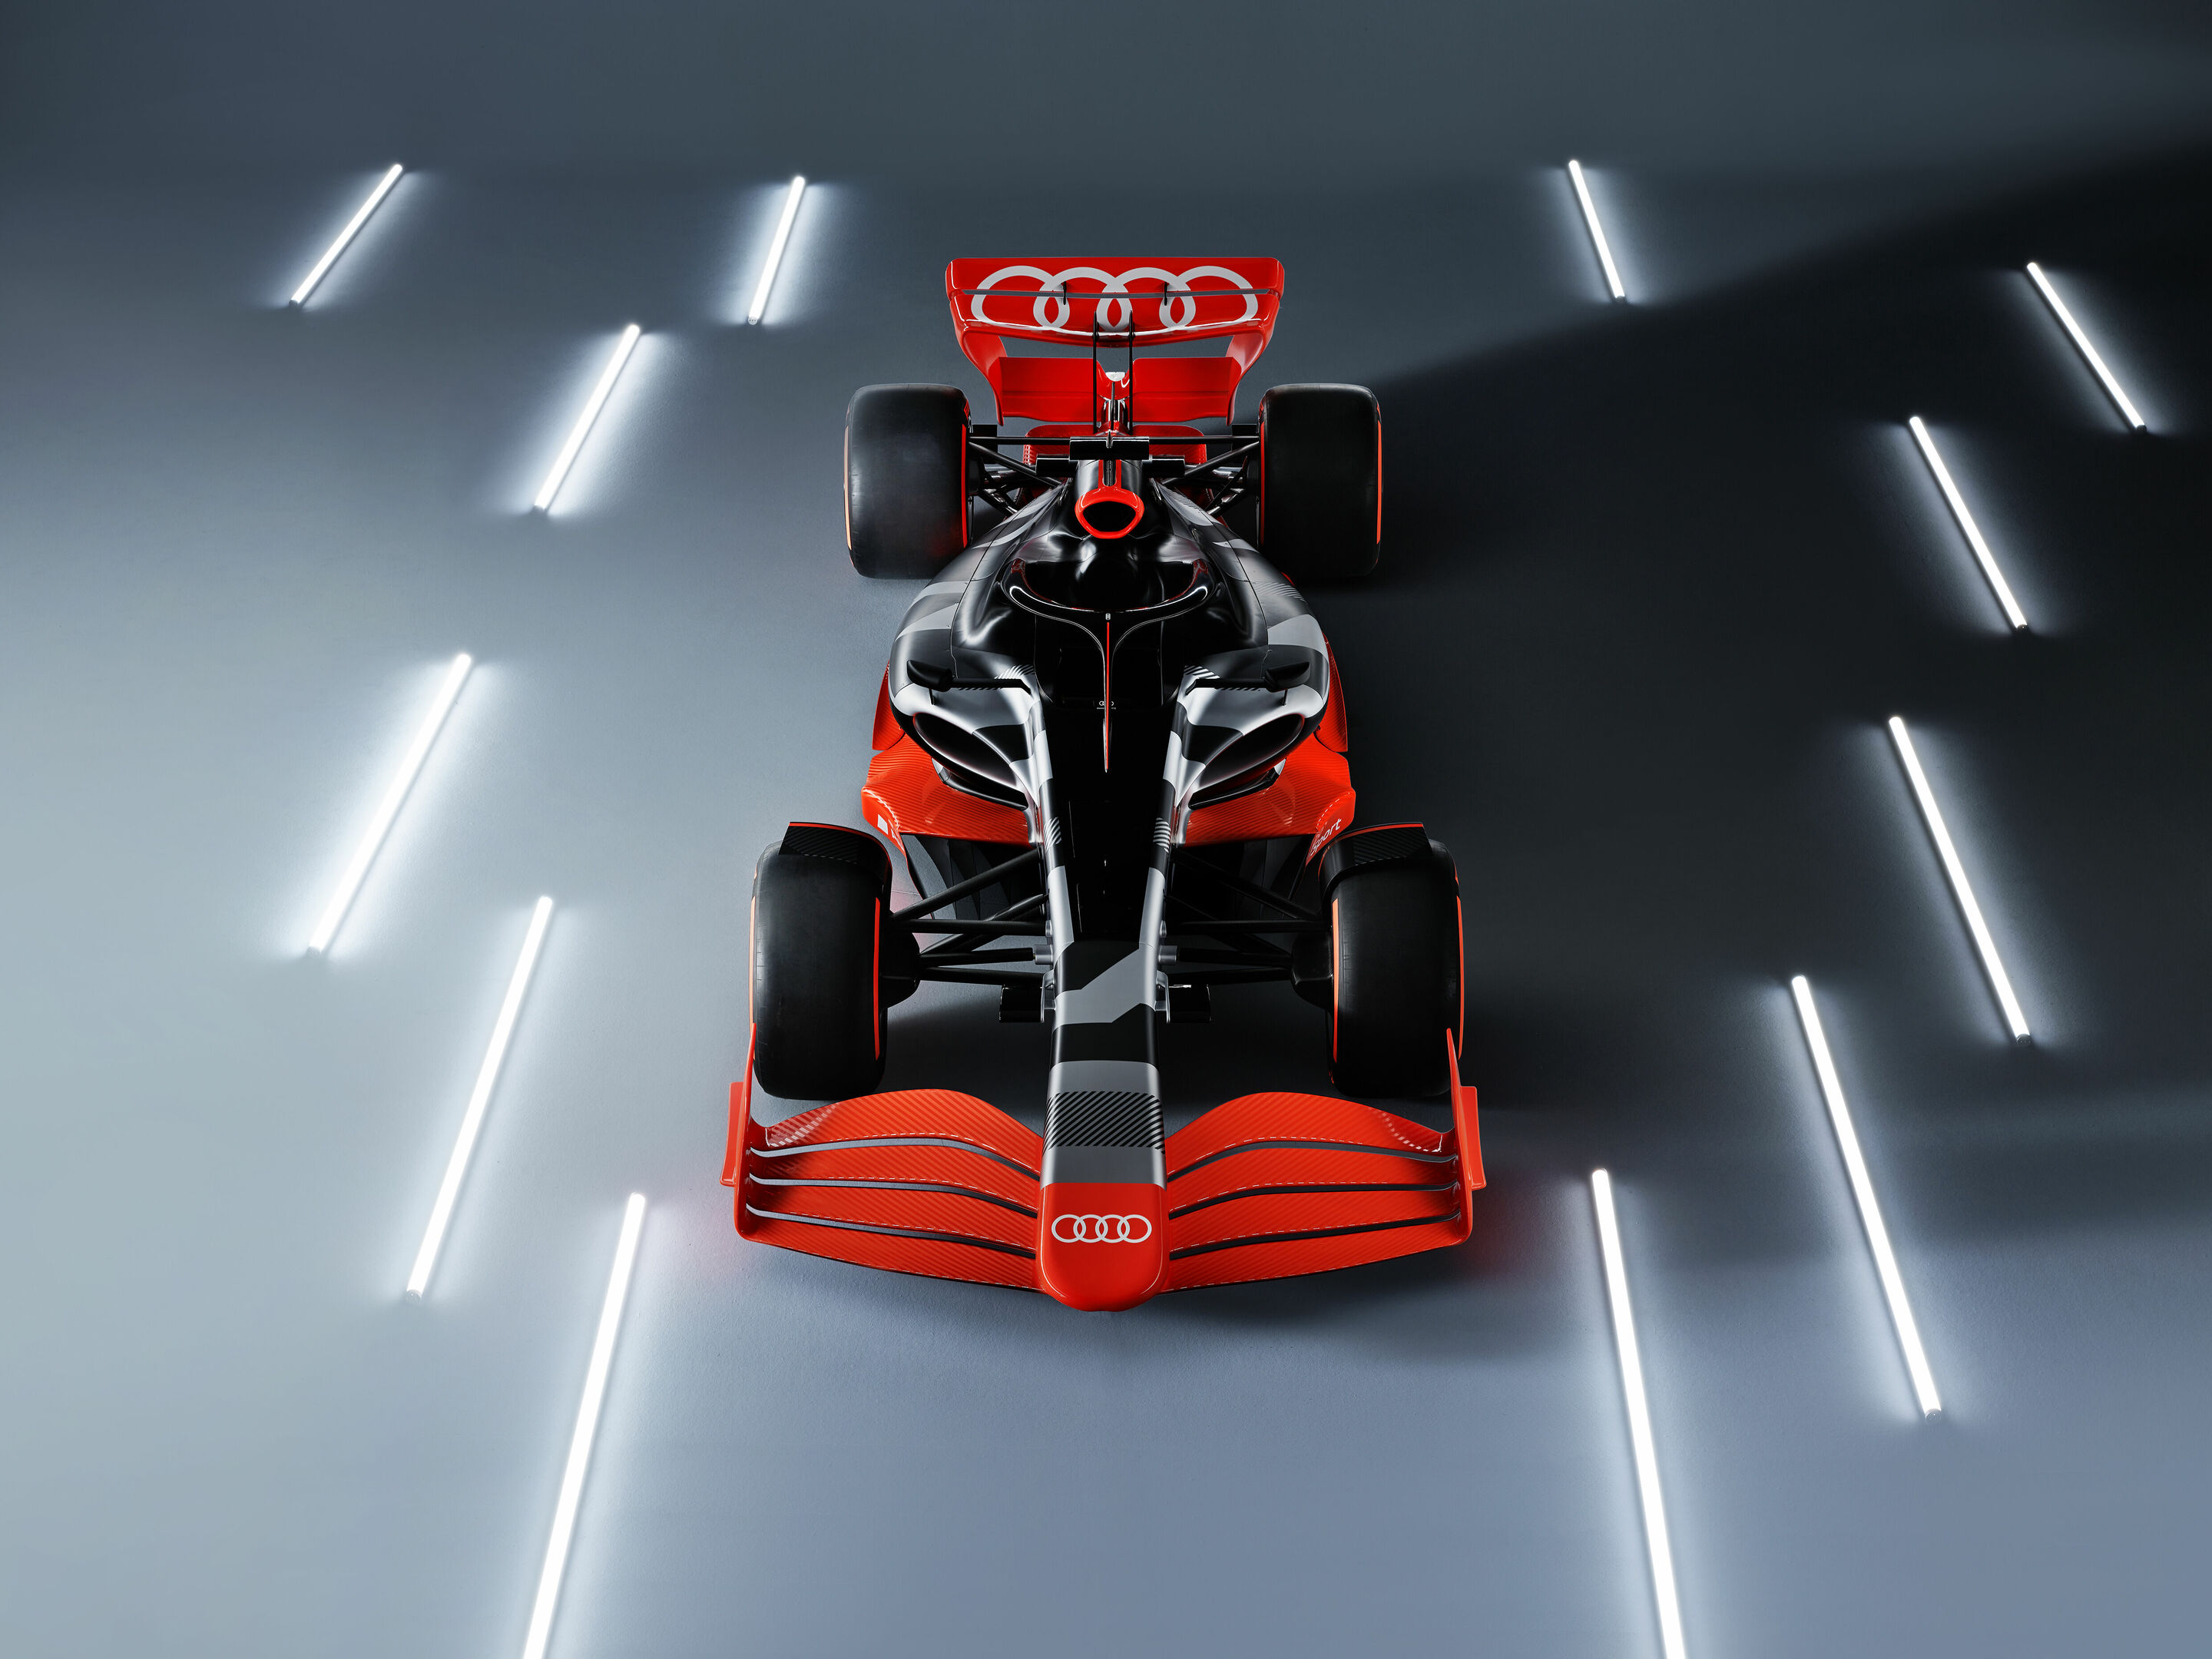 Showcar mit Audi F1 launch livery